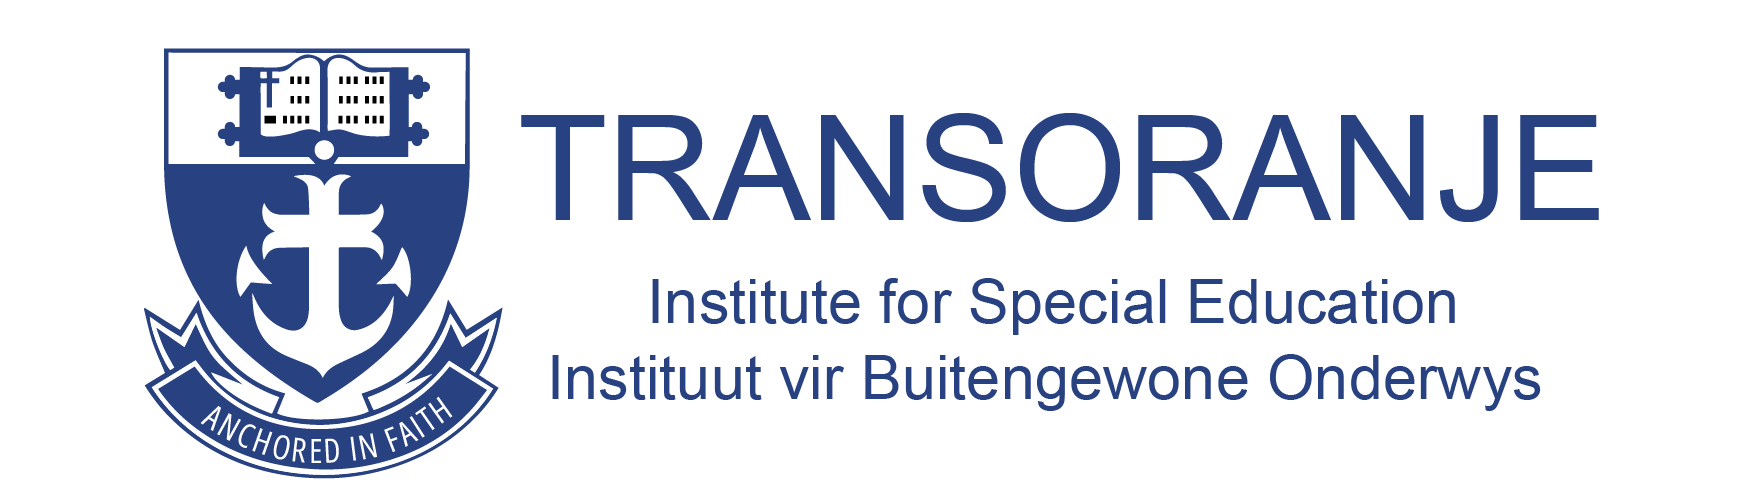 Transoranje Institute for Special Education